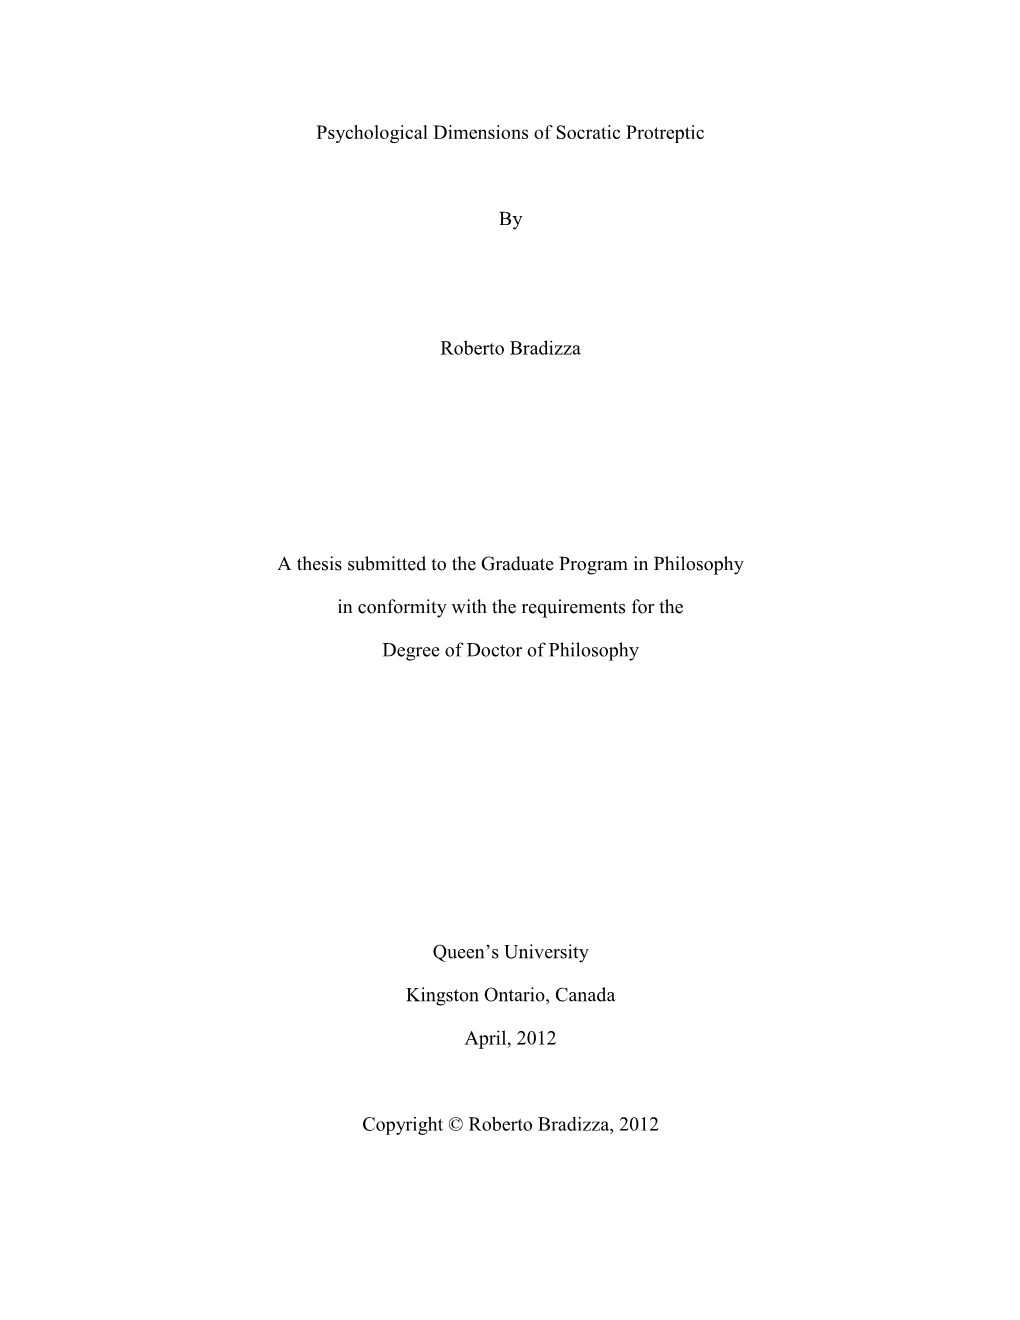 Psychological Dimensions of Socratic Protreptic by Roberto Bradizza A